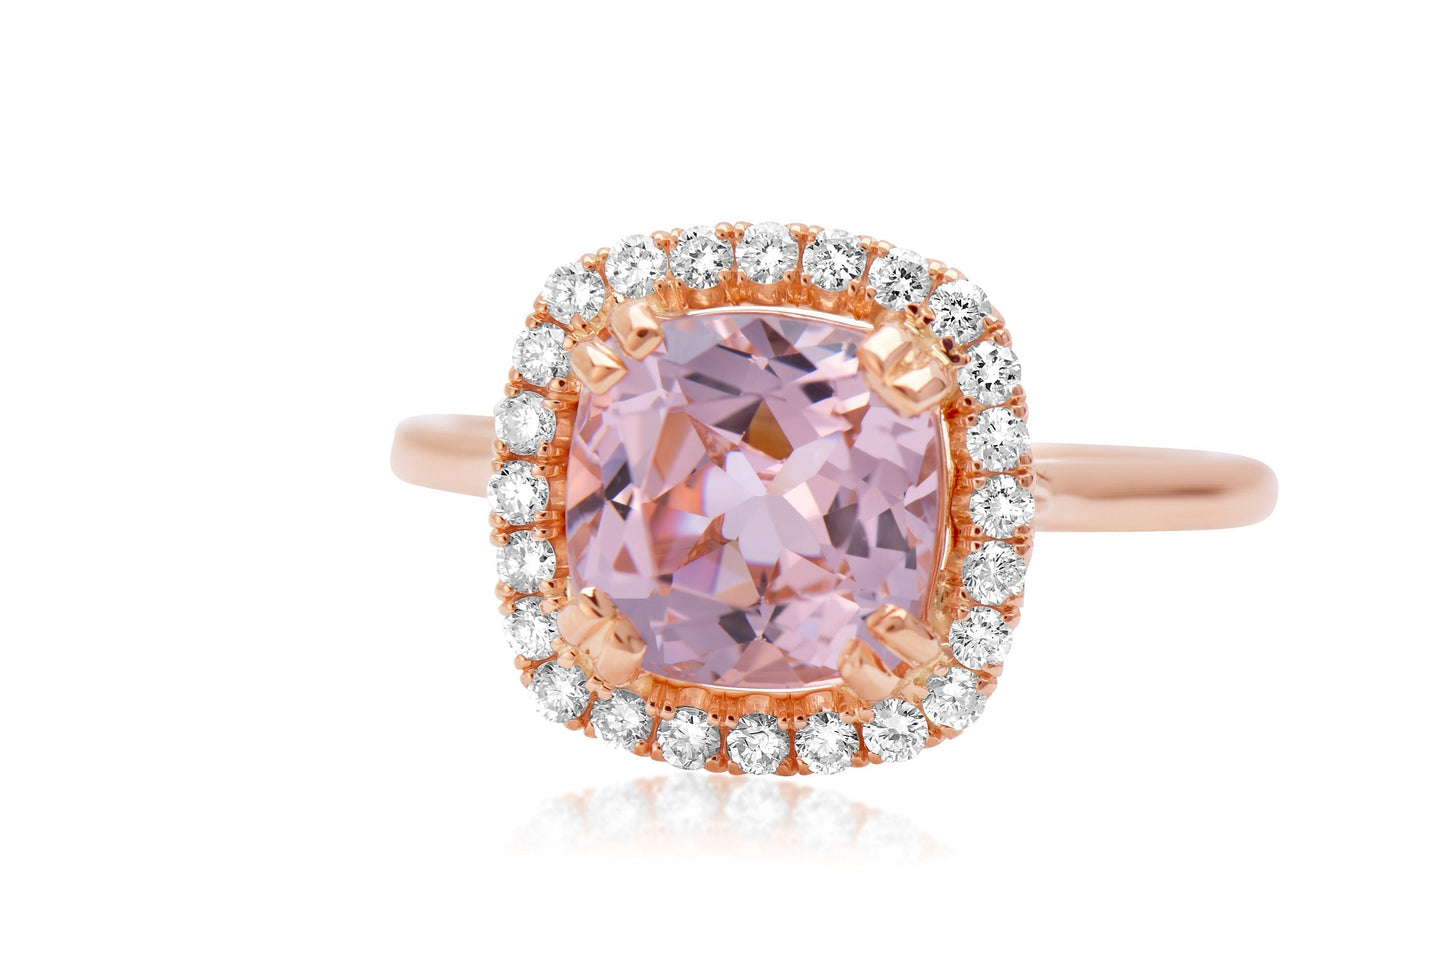 Cushion Cut Morganite Ring with a Beautiful Pink Morganite gemstone